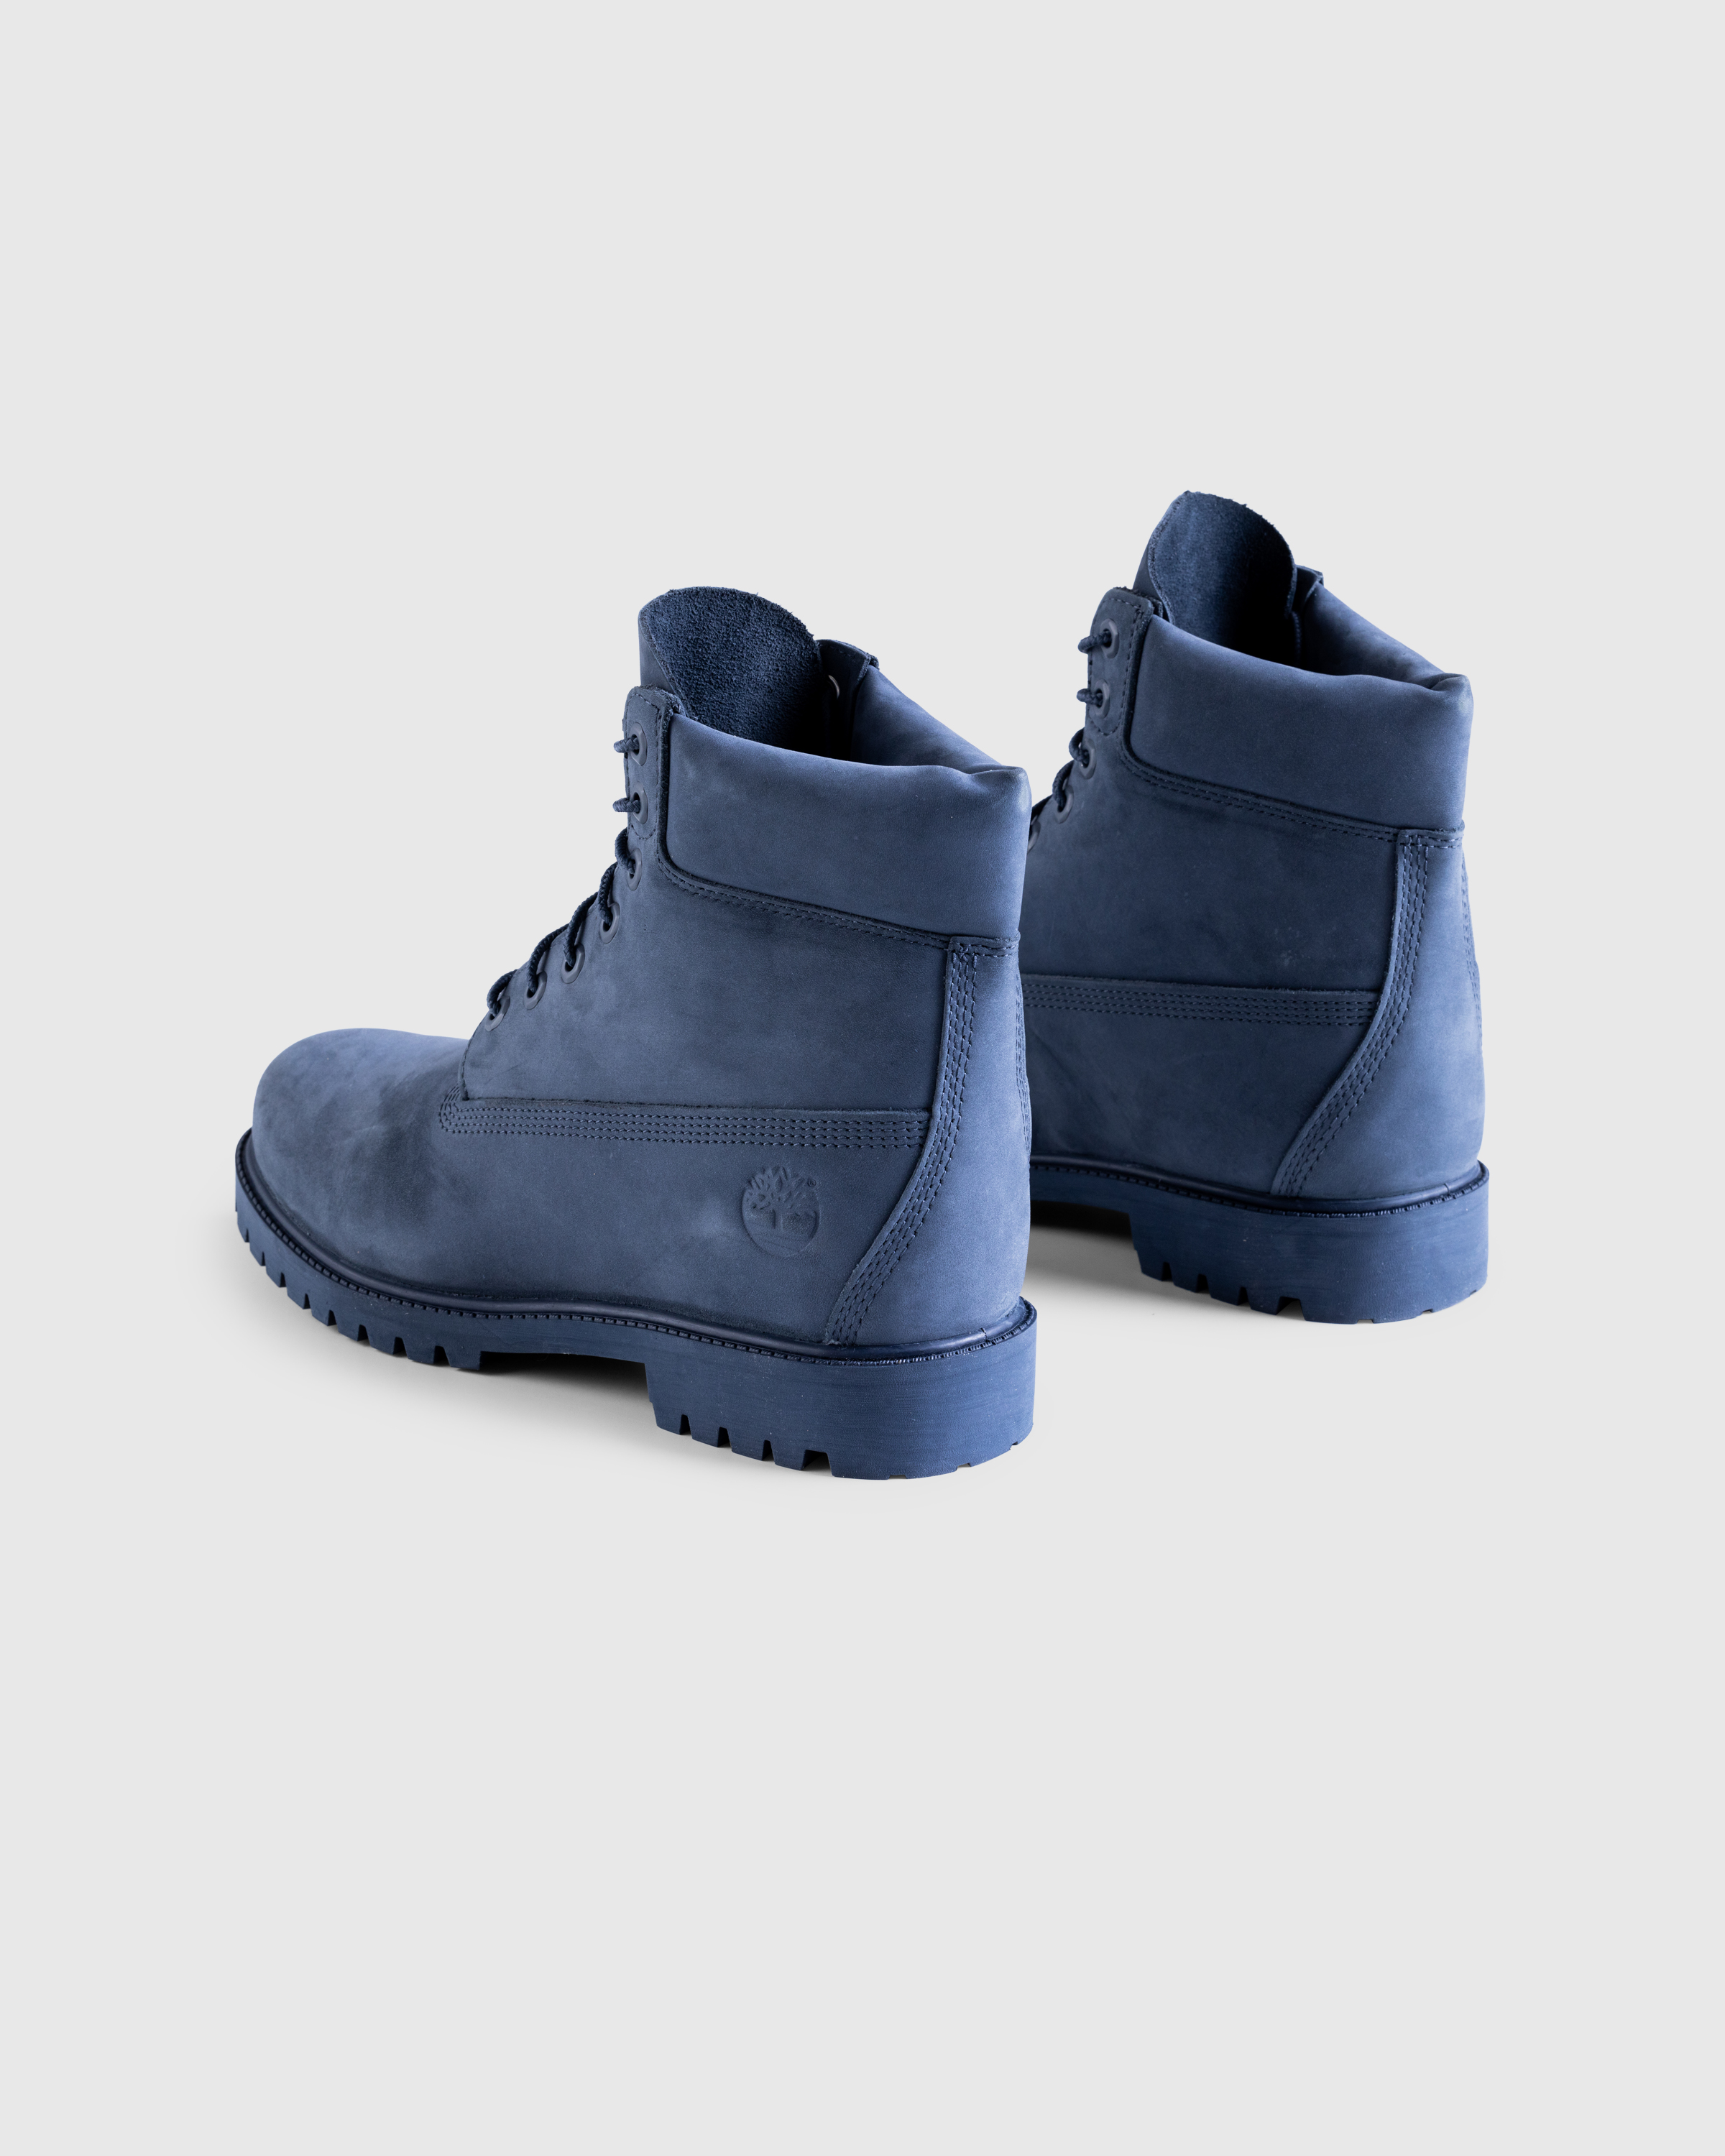 Timberland – Heritage 6-Inch Boot Dark Blue Nubuck - Boots - Blue - Image 4